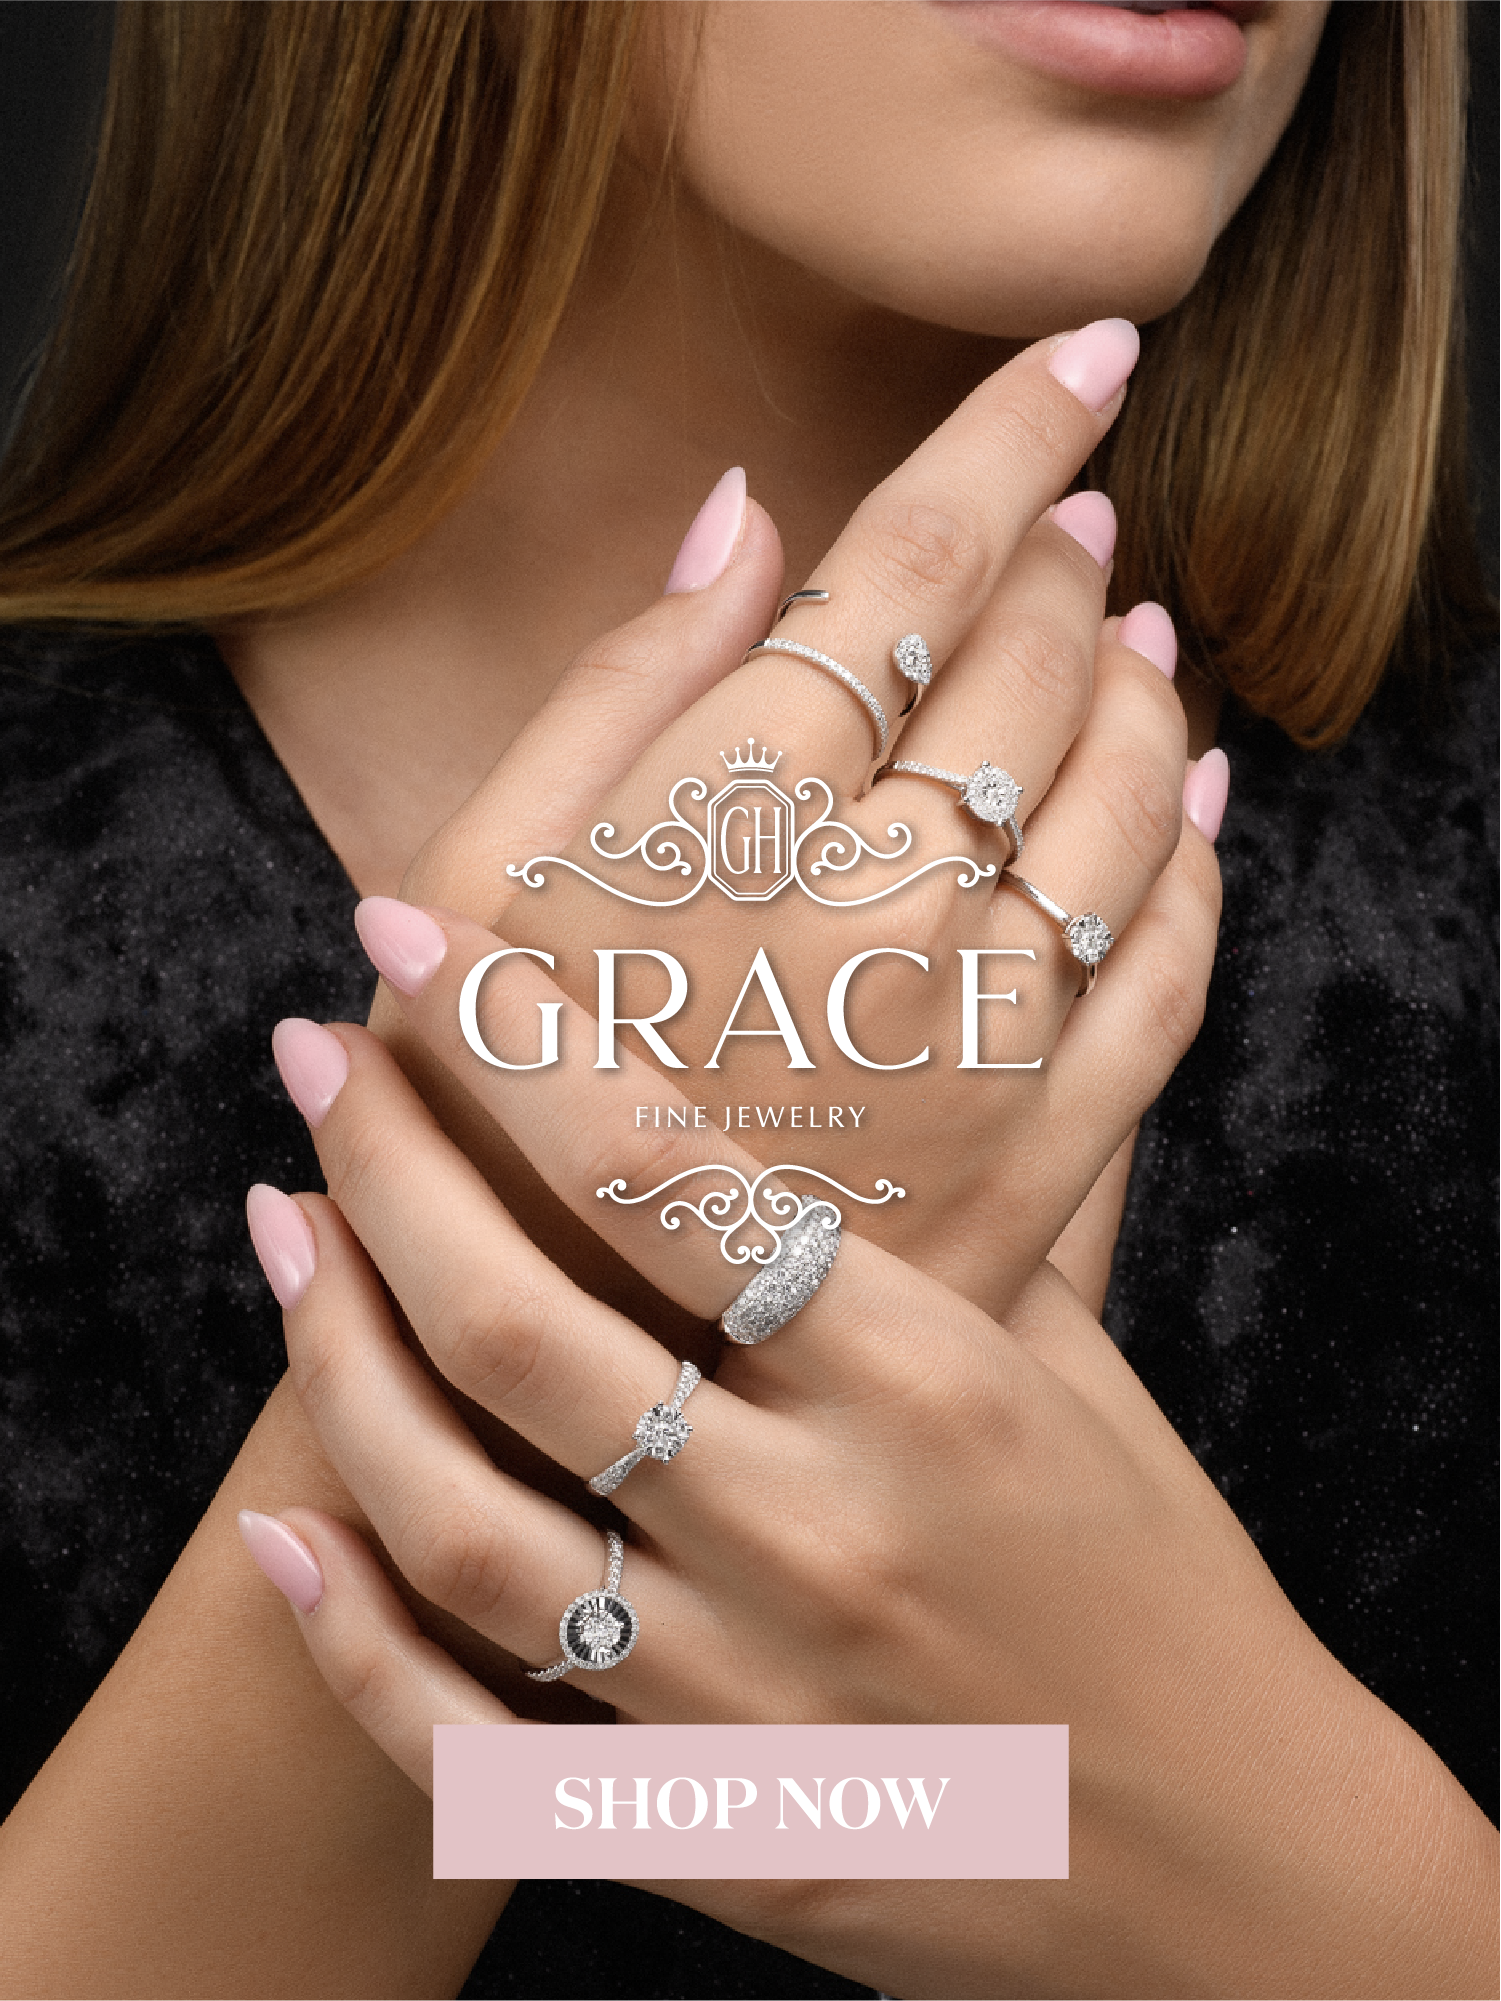 GRACE jewelry. shop now